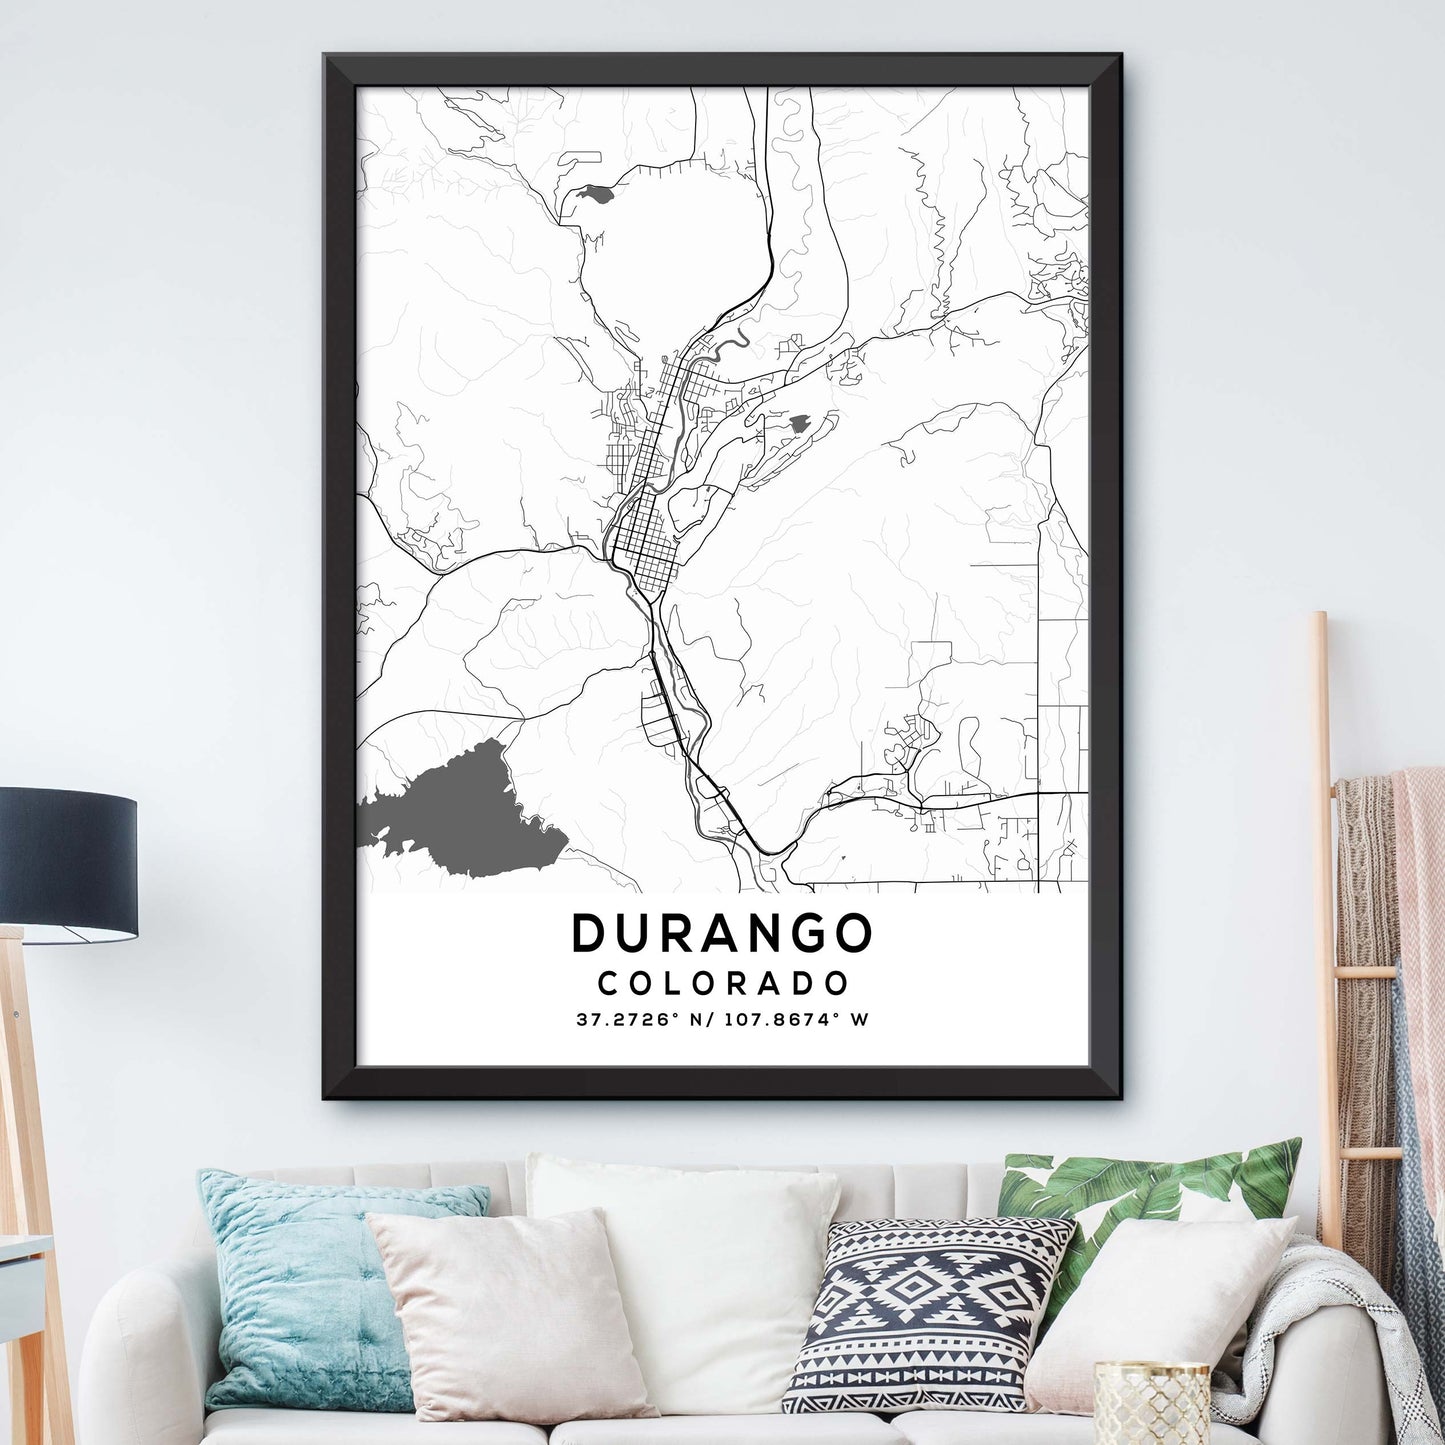 Durango,Colorado Map Print